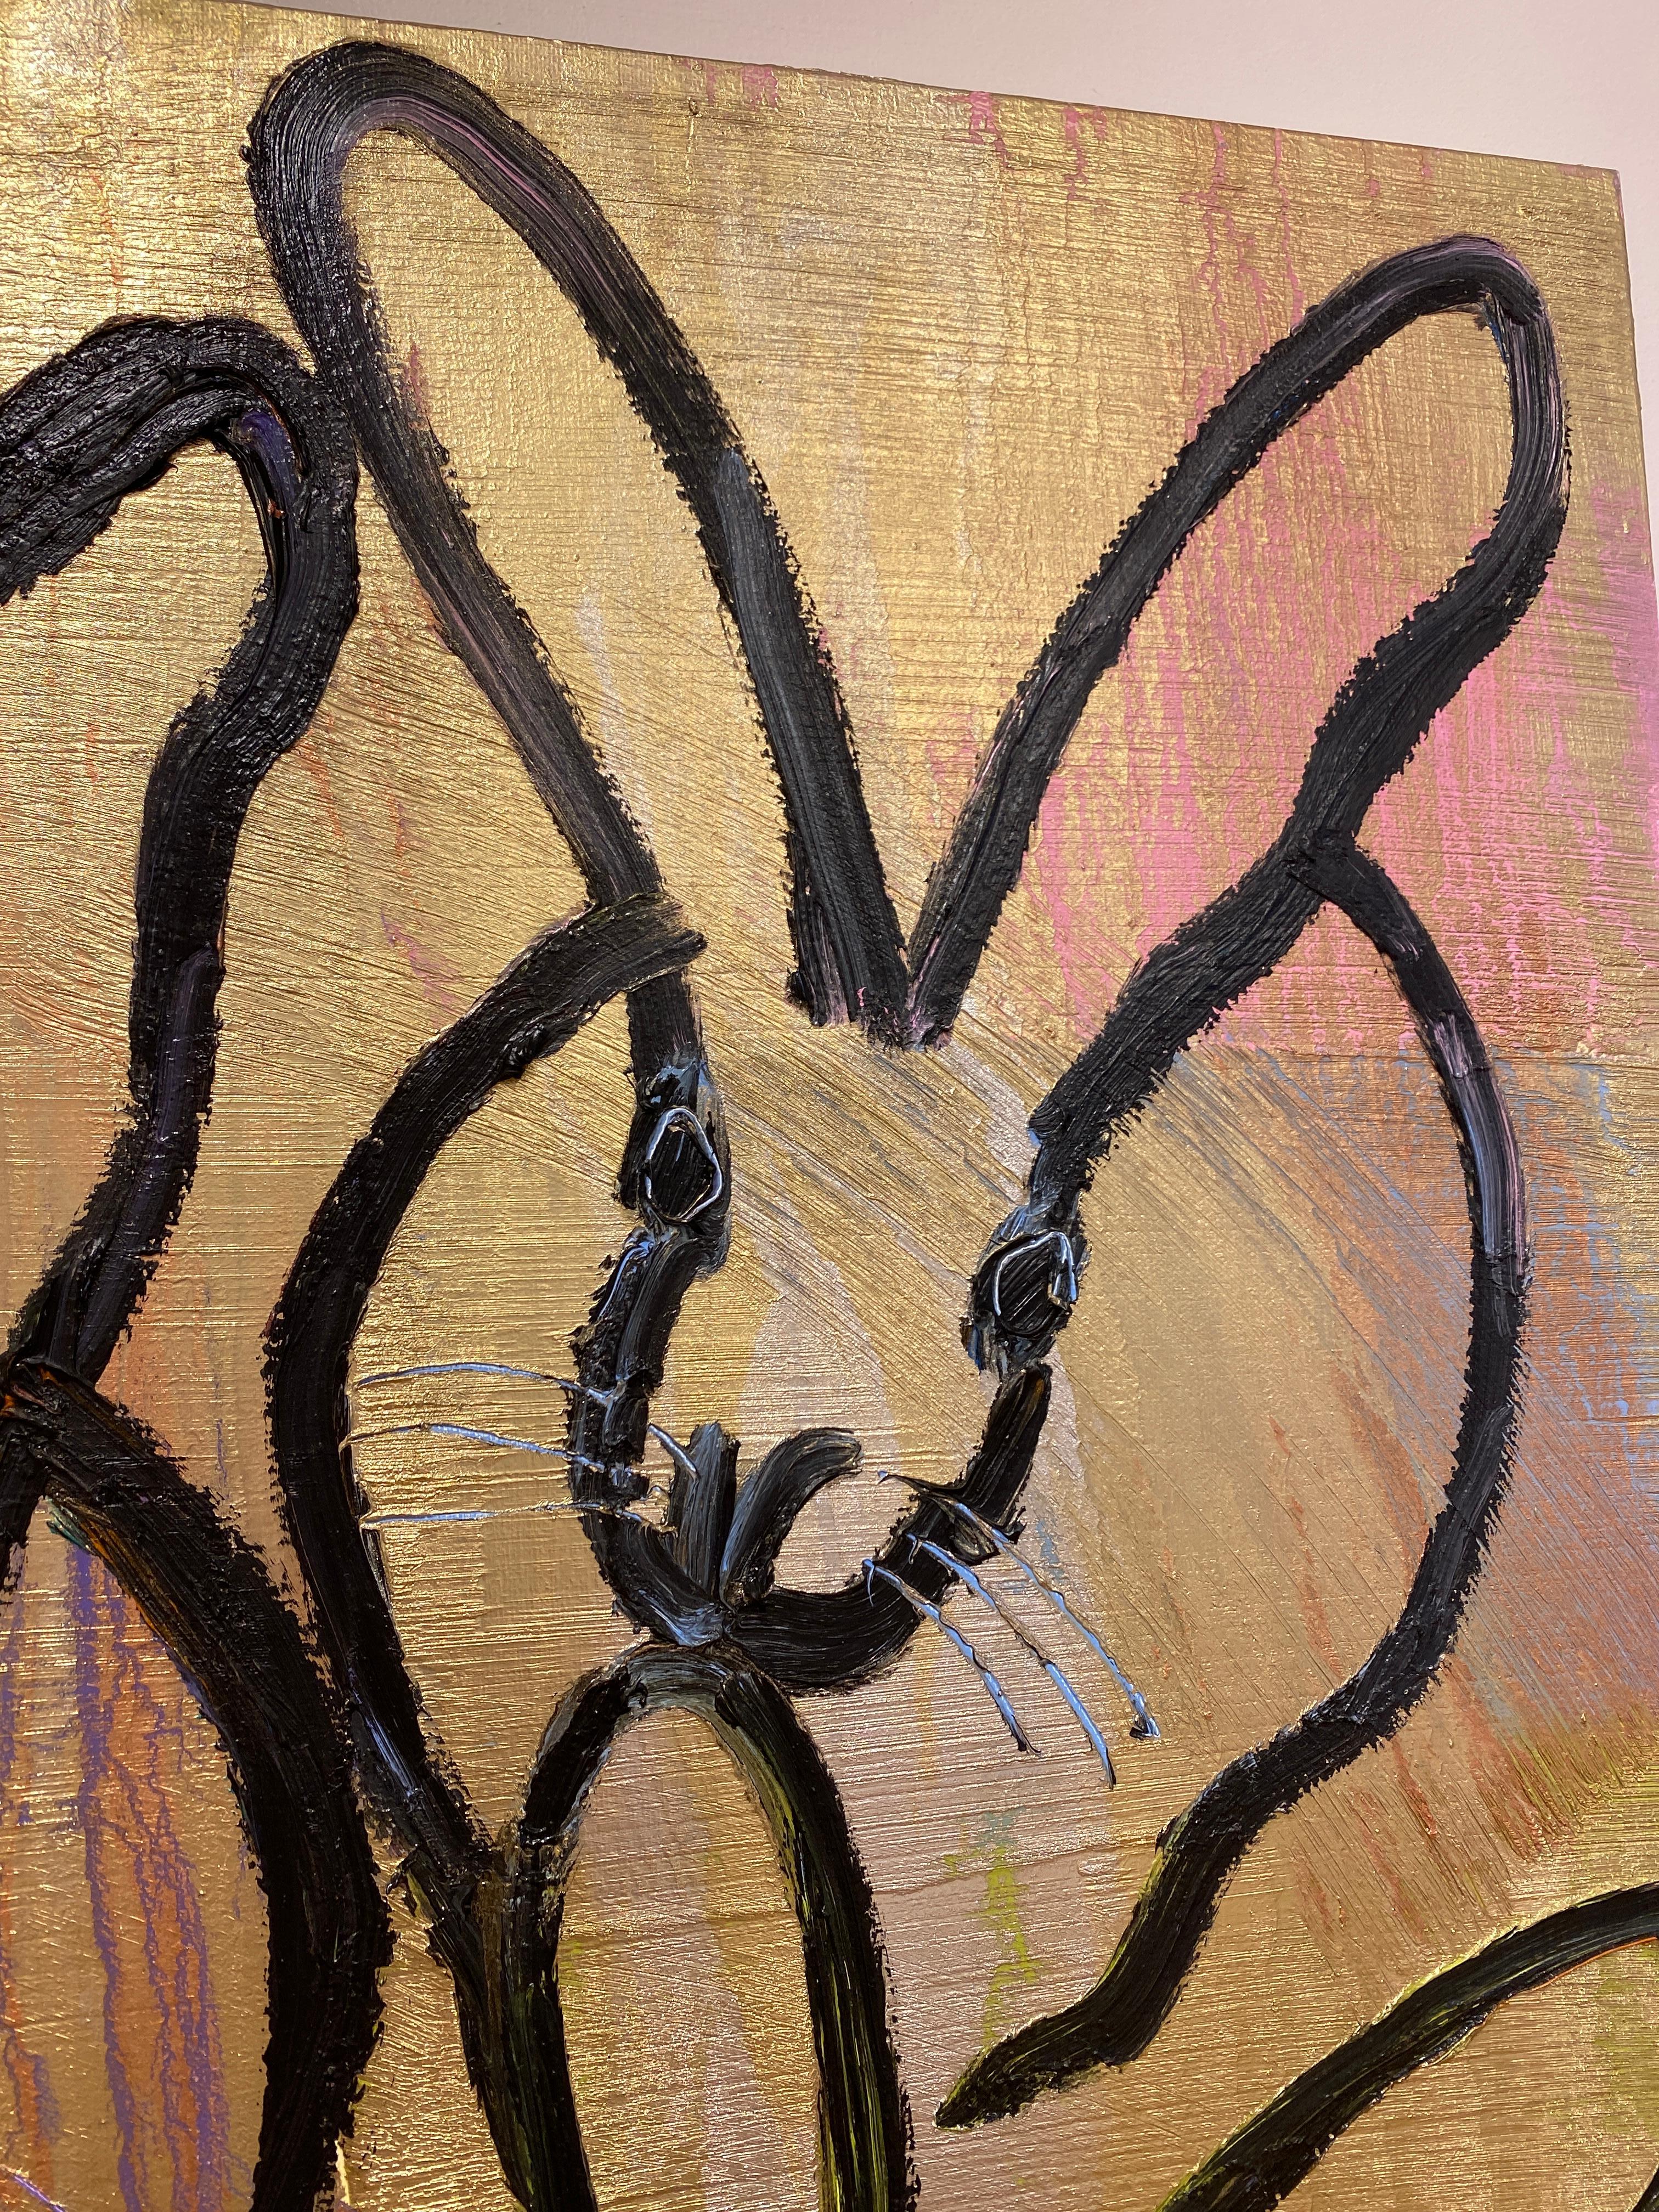 Artist:  Slonem, Hunt
Title:  6 Bunnies
Date:  2020
Medium:  Oil on canvas
Unframed Dimensions:  30 x 30